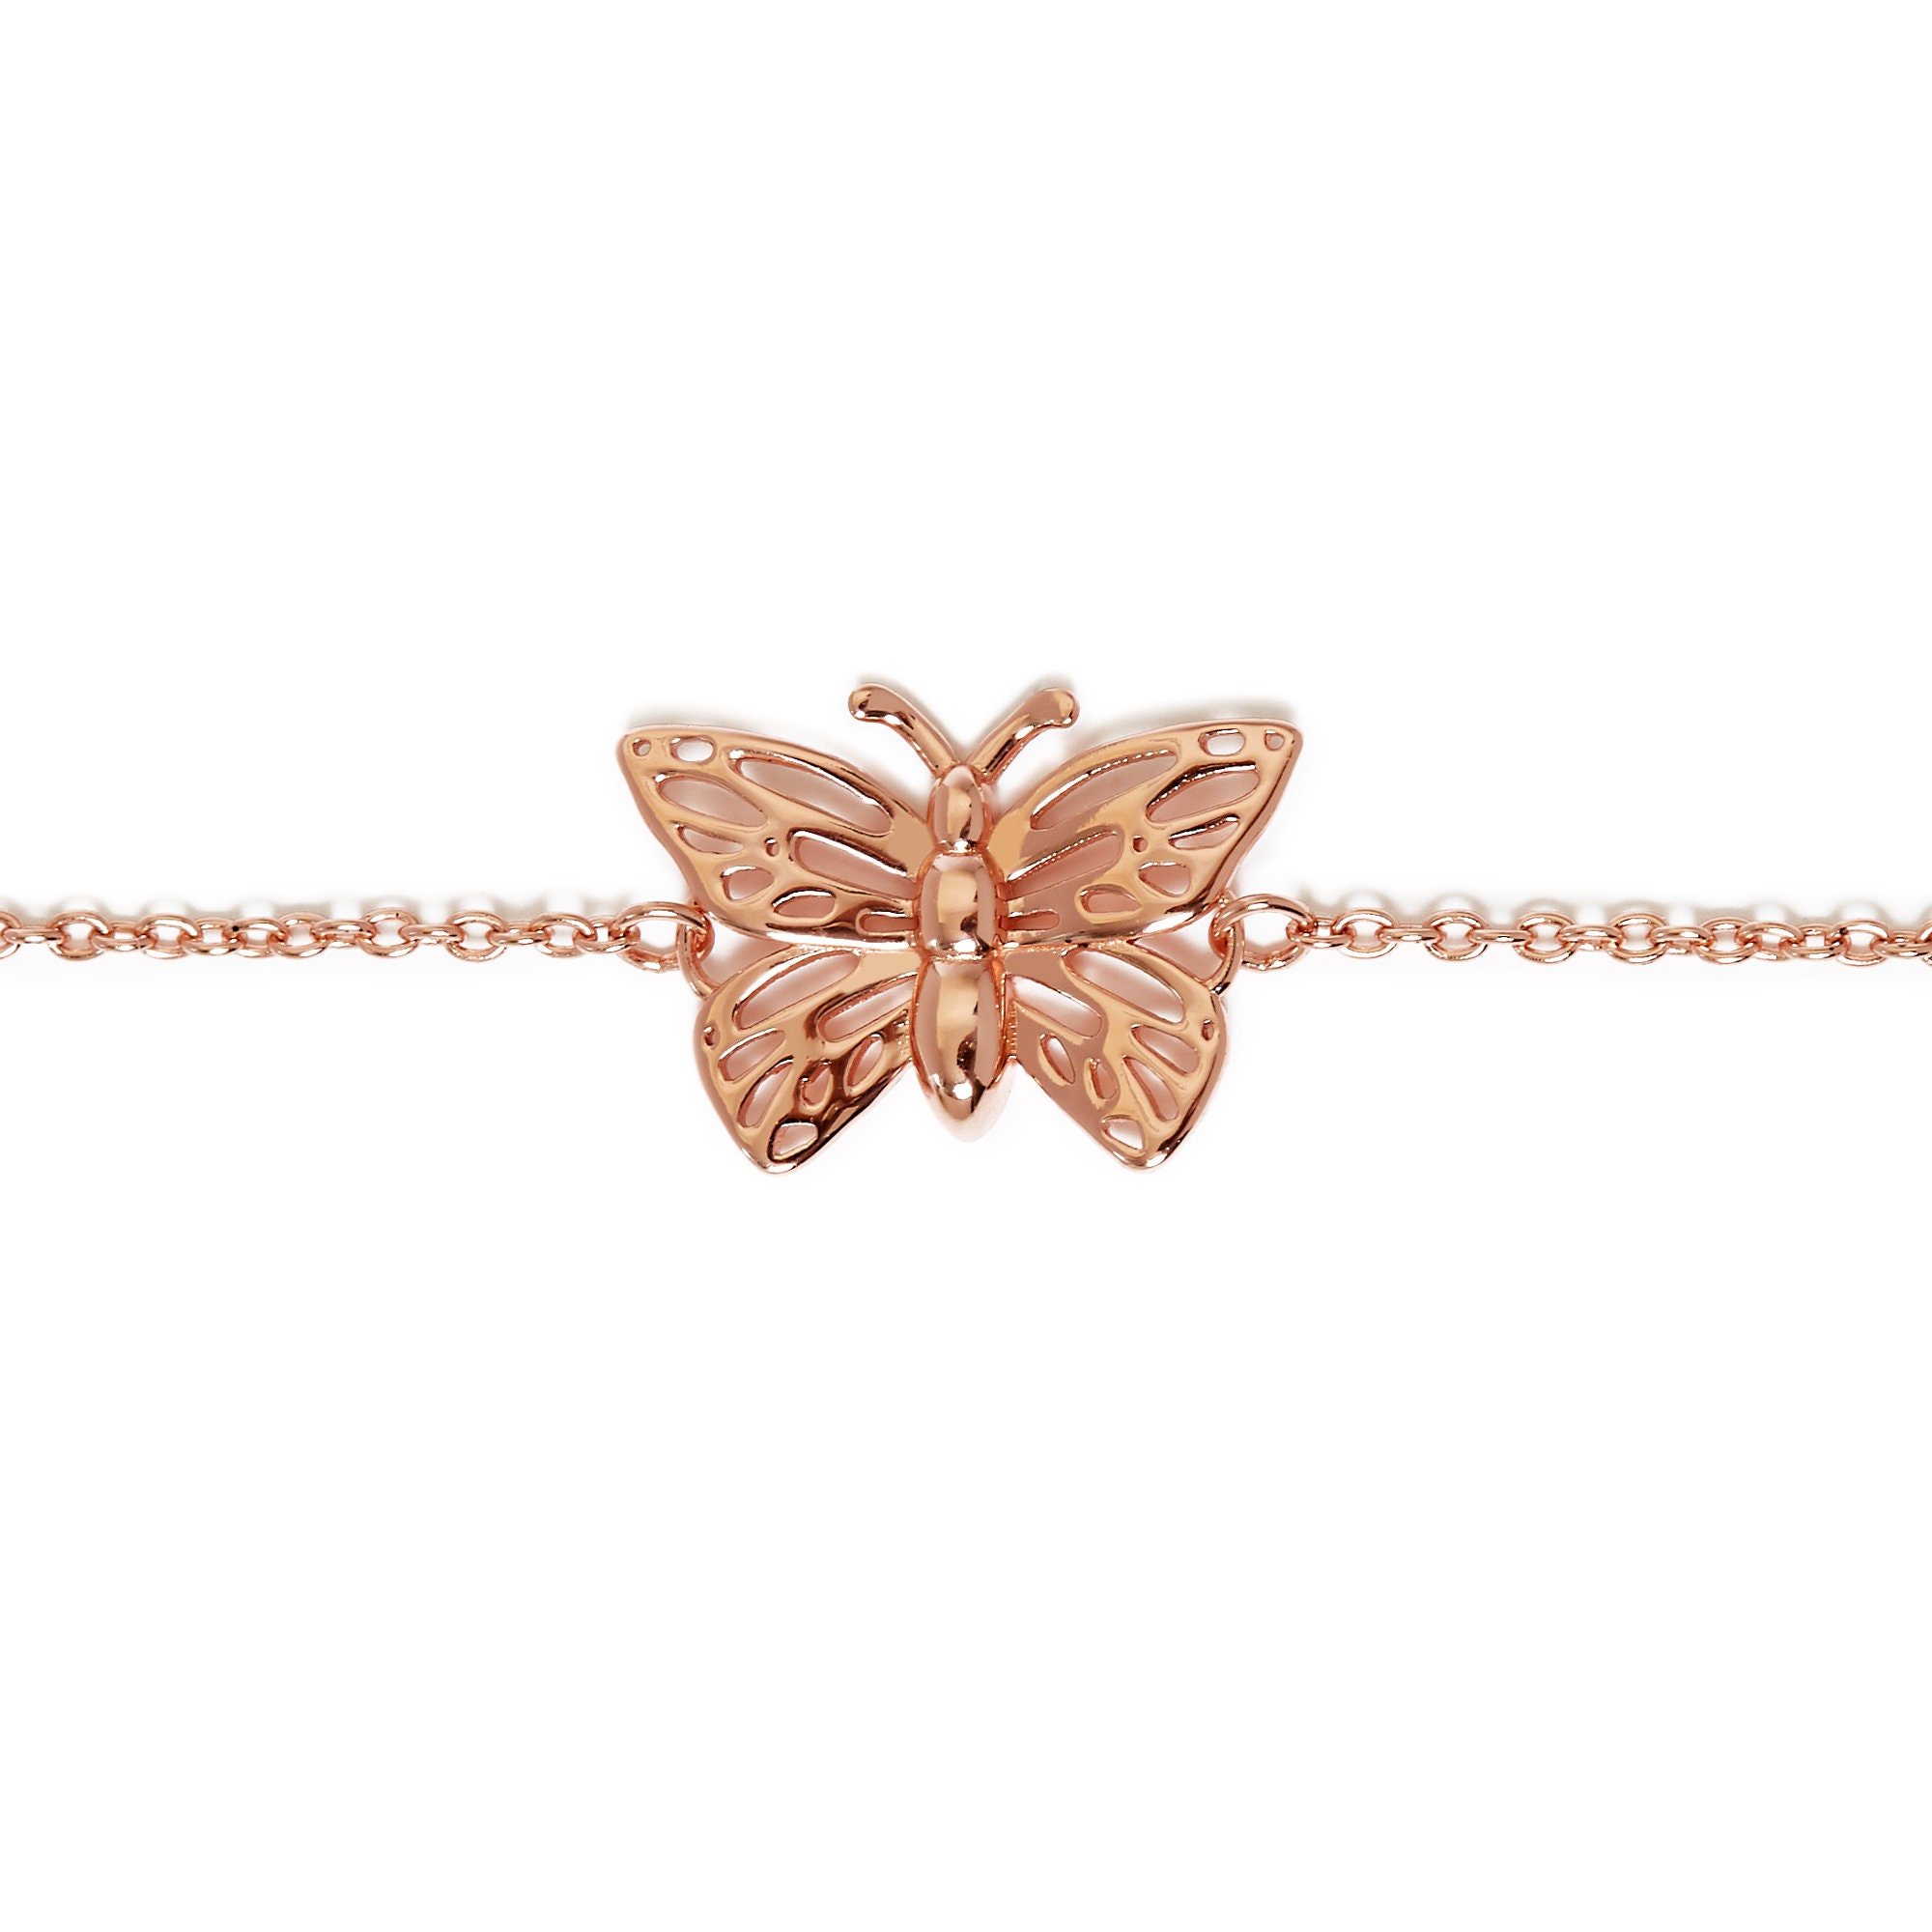 Butterfly Bracelet (Adjustable) - Solid .925 Sterling Silver